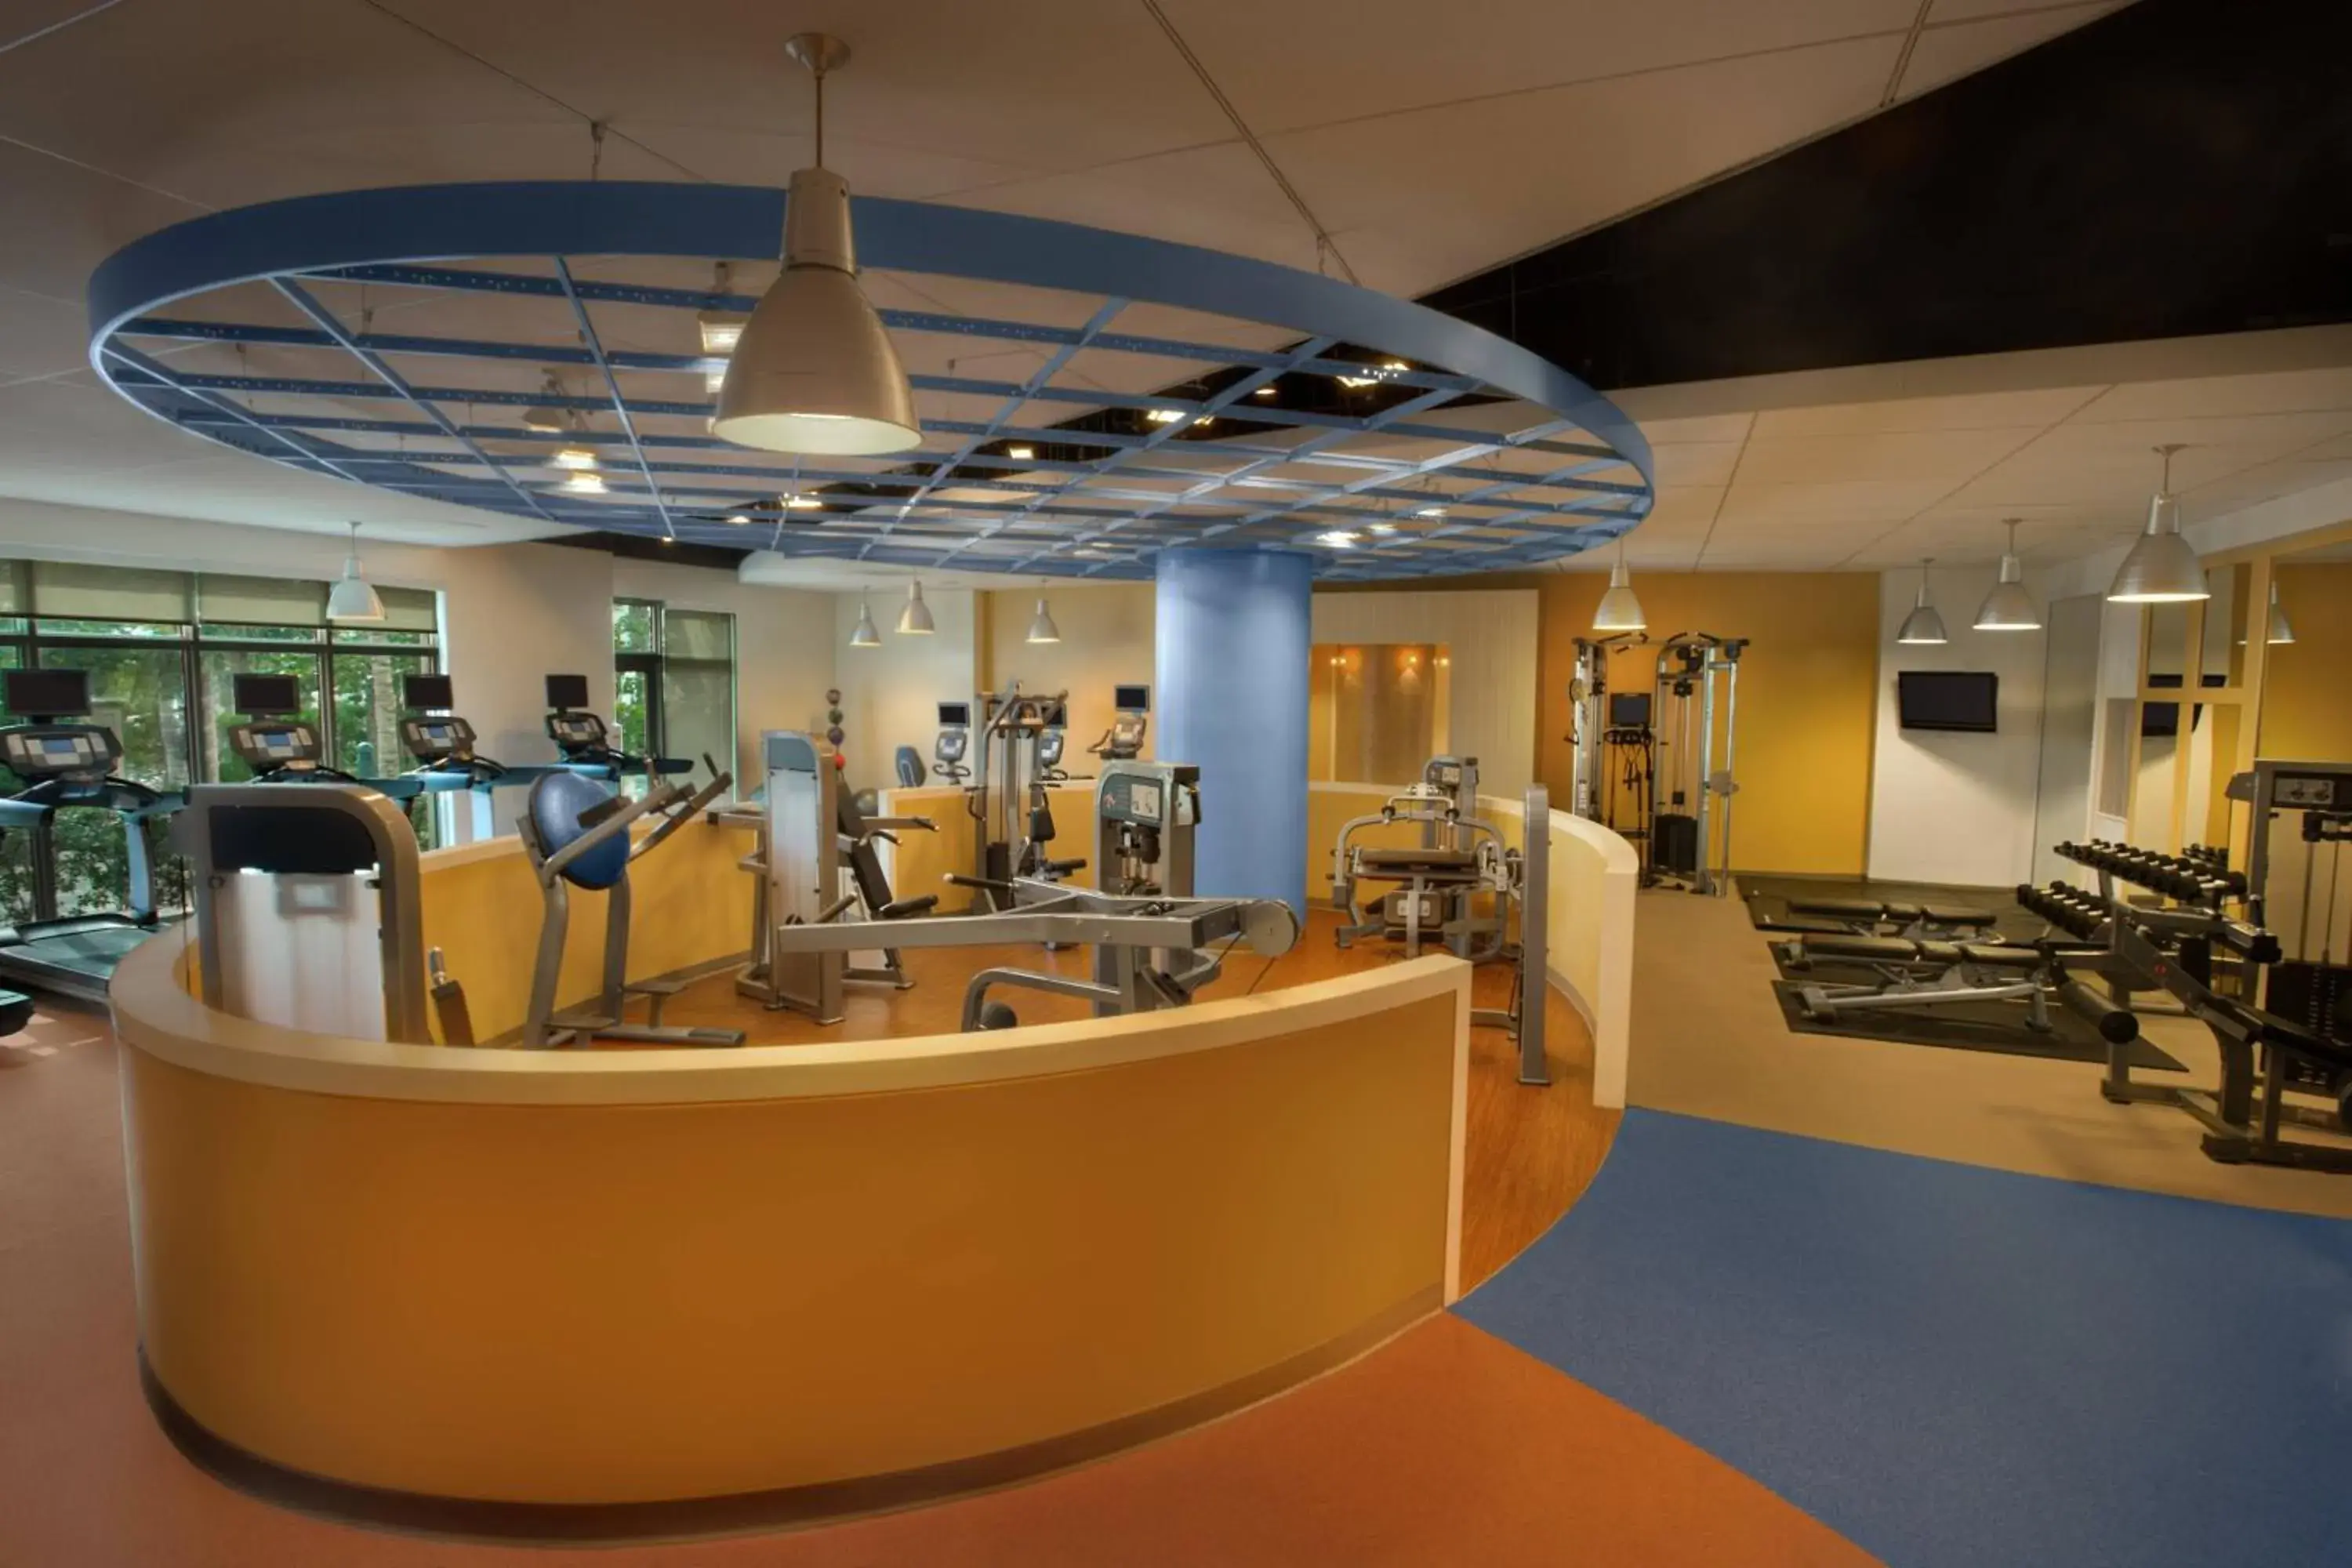 Fitness centre/facilities in Marriott's Oceana Palms